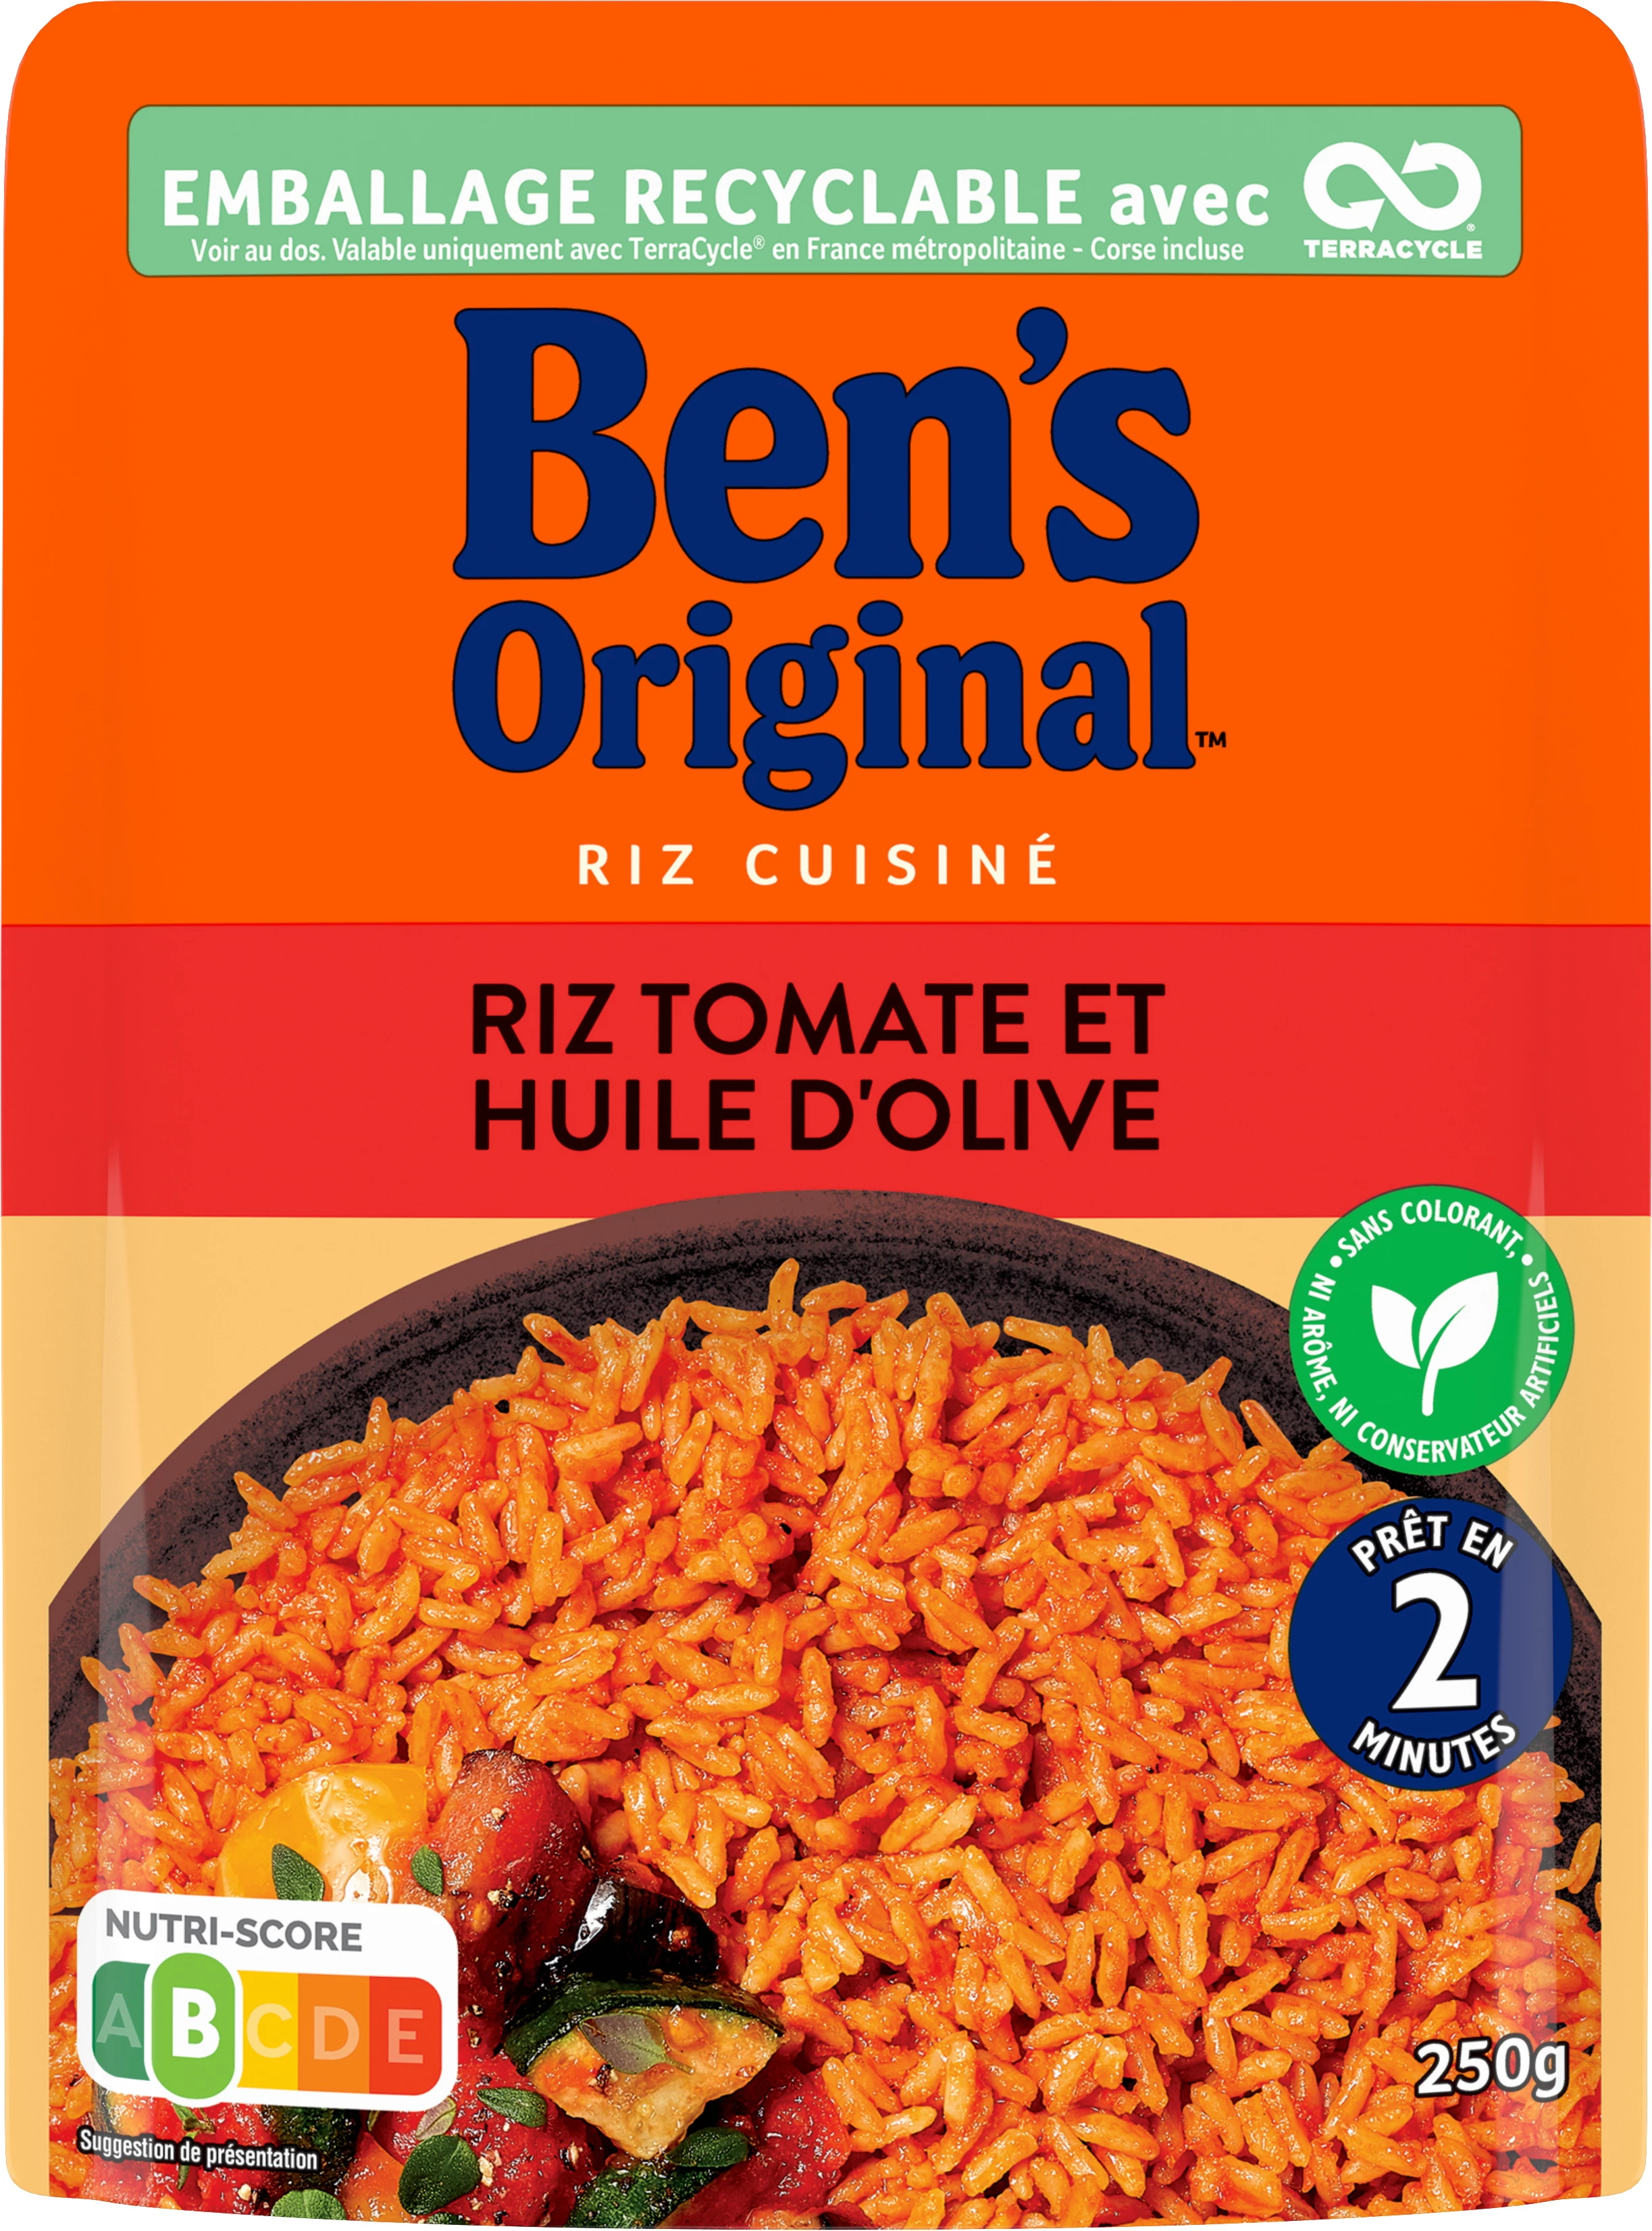 Riz Tomate& Huile d'Olive, 250g - BEN'S Original